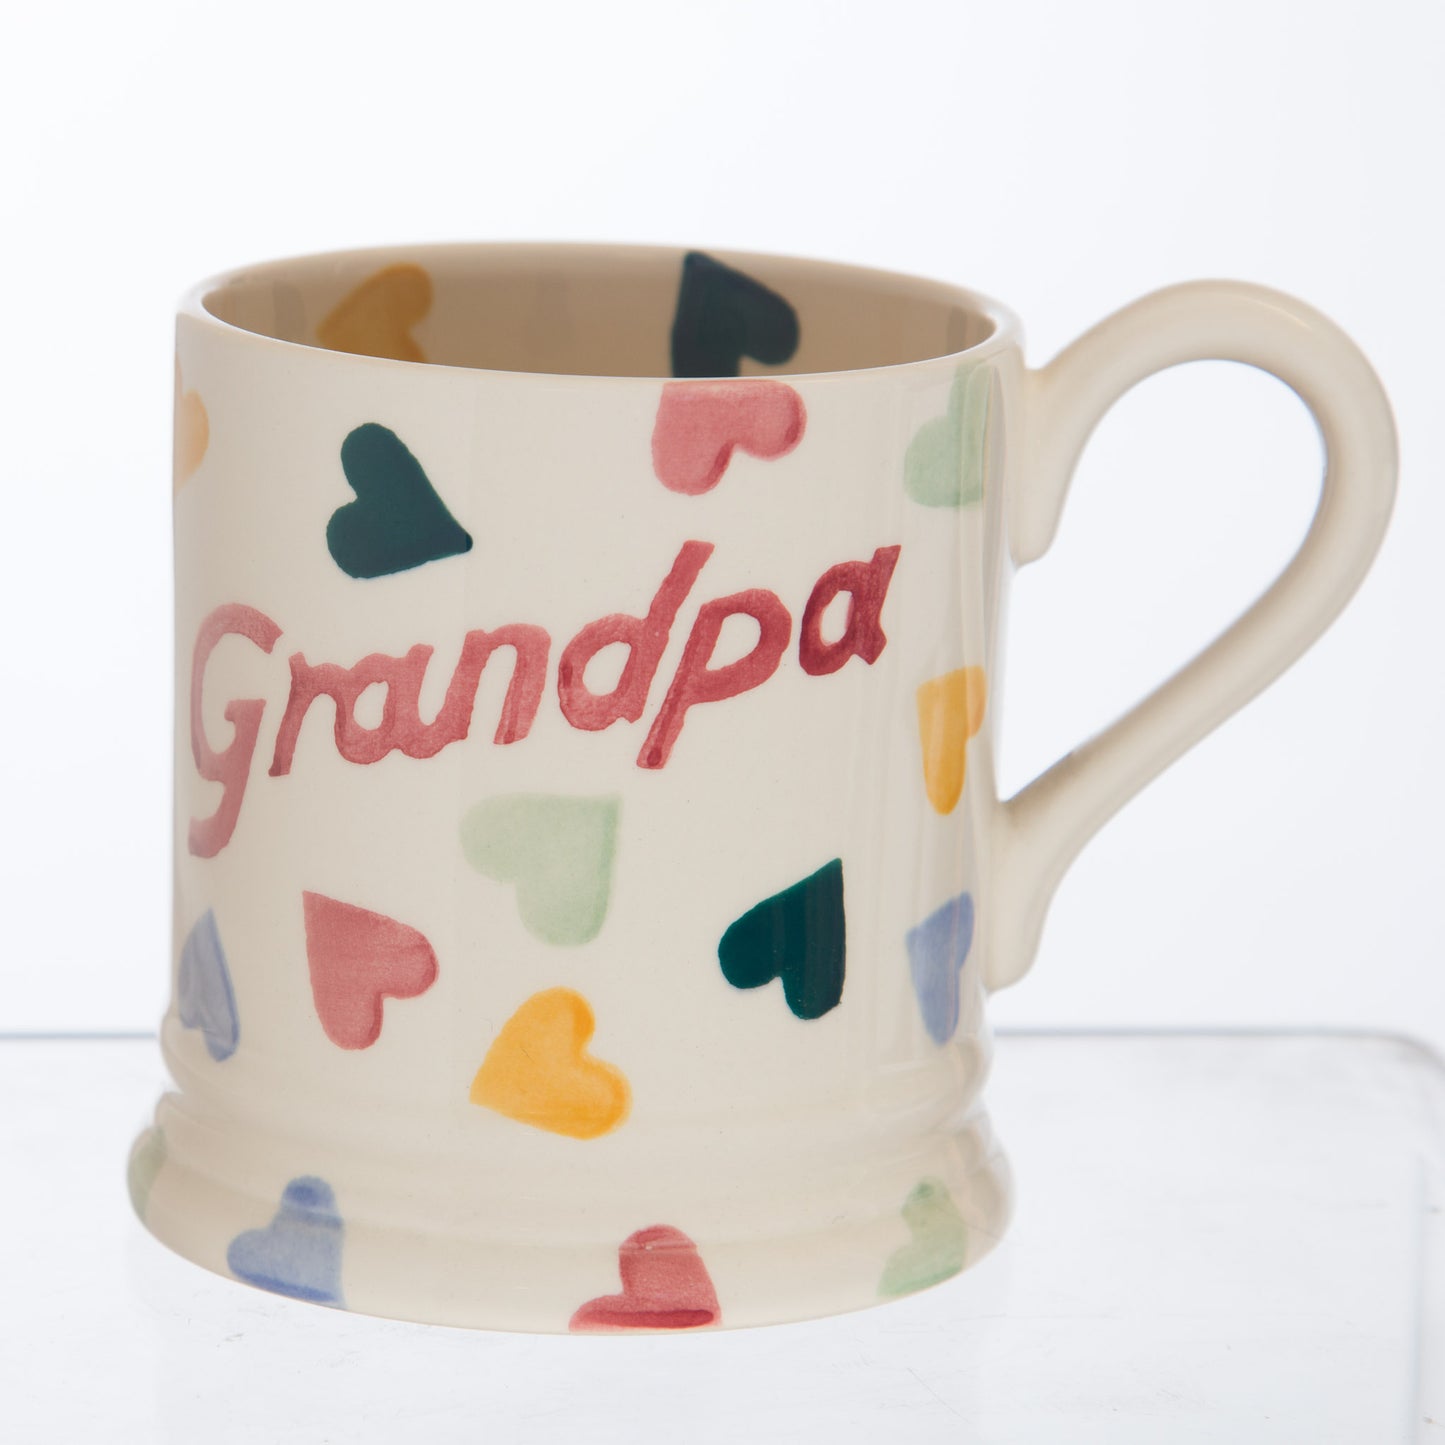 Grandpa half pint mug  from Emma Bridgewater